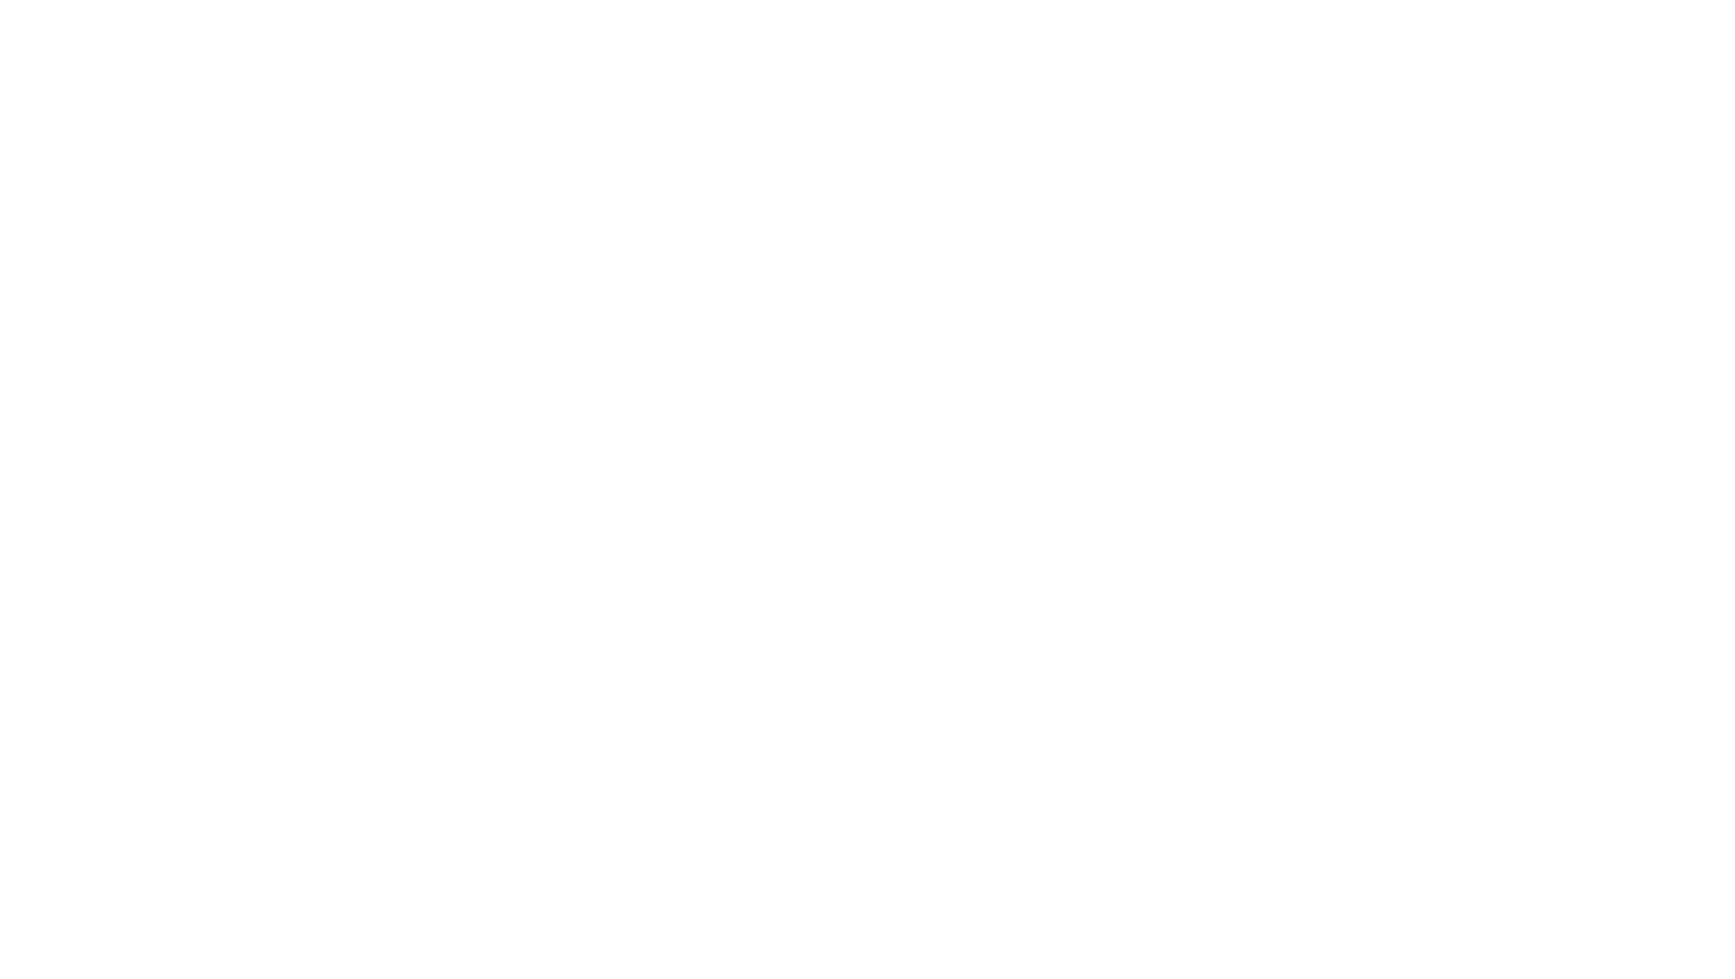 Auvergne-Rhône-Alpes Region